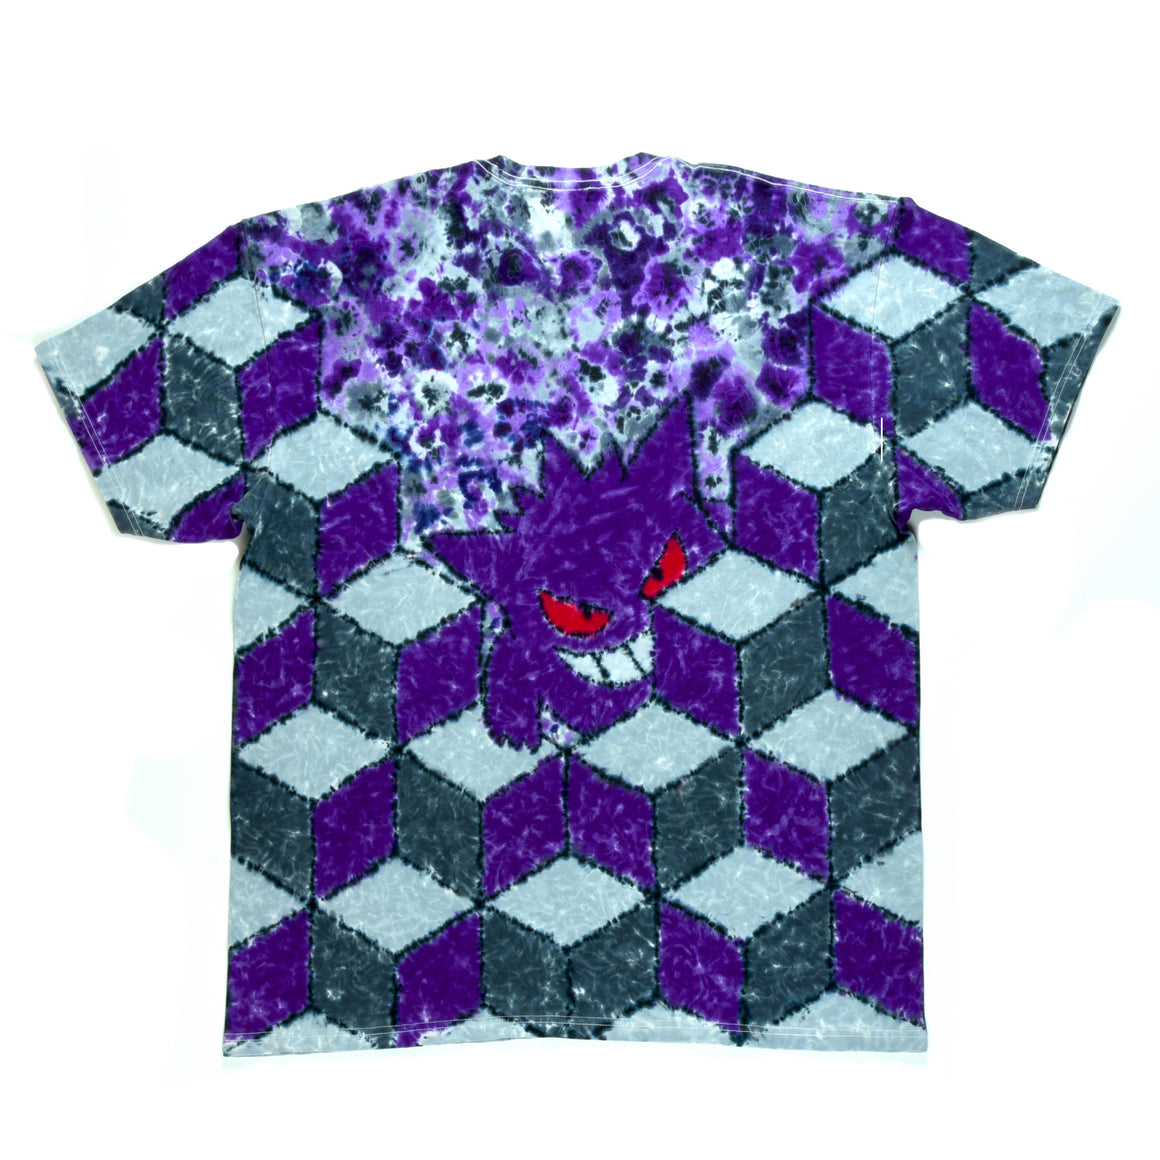 XL Tie Dye T-Shirt - "Gengar"